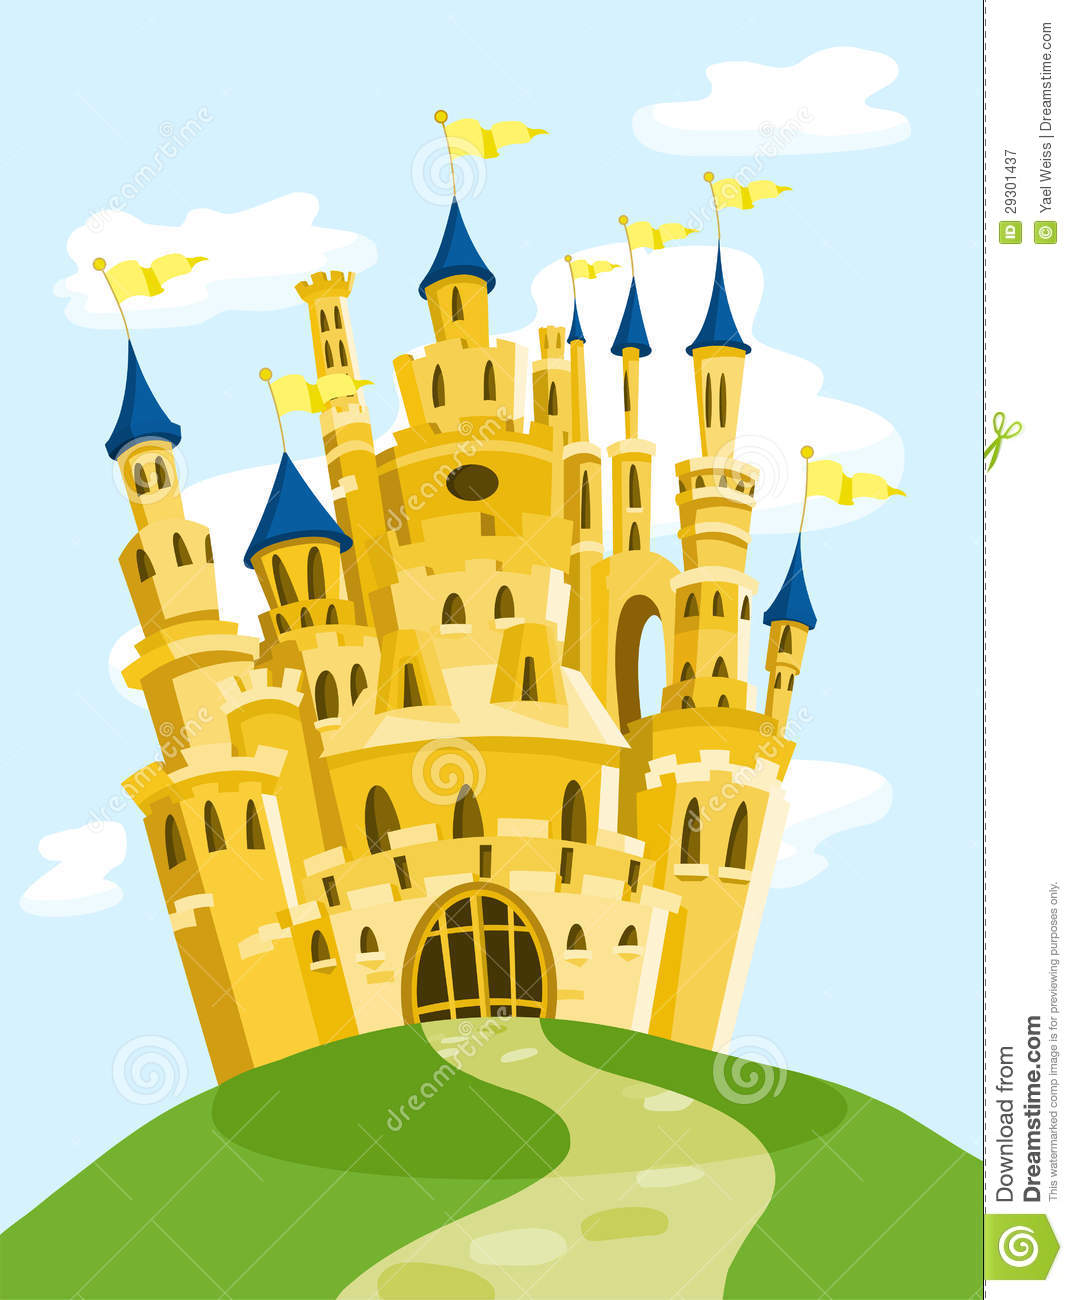 Magic Castle Royalty Free Stock Photography   Image  29301437